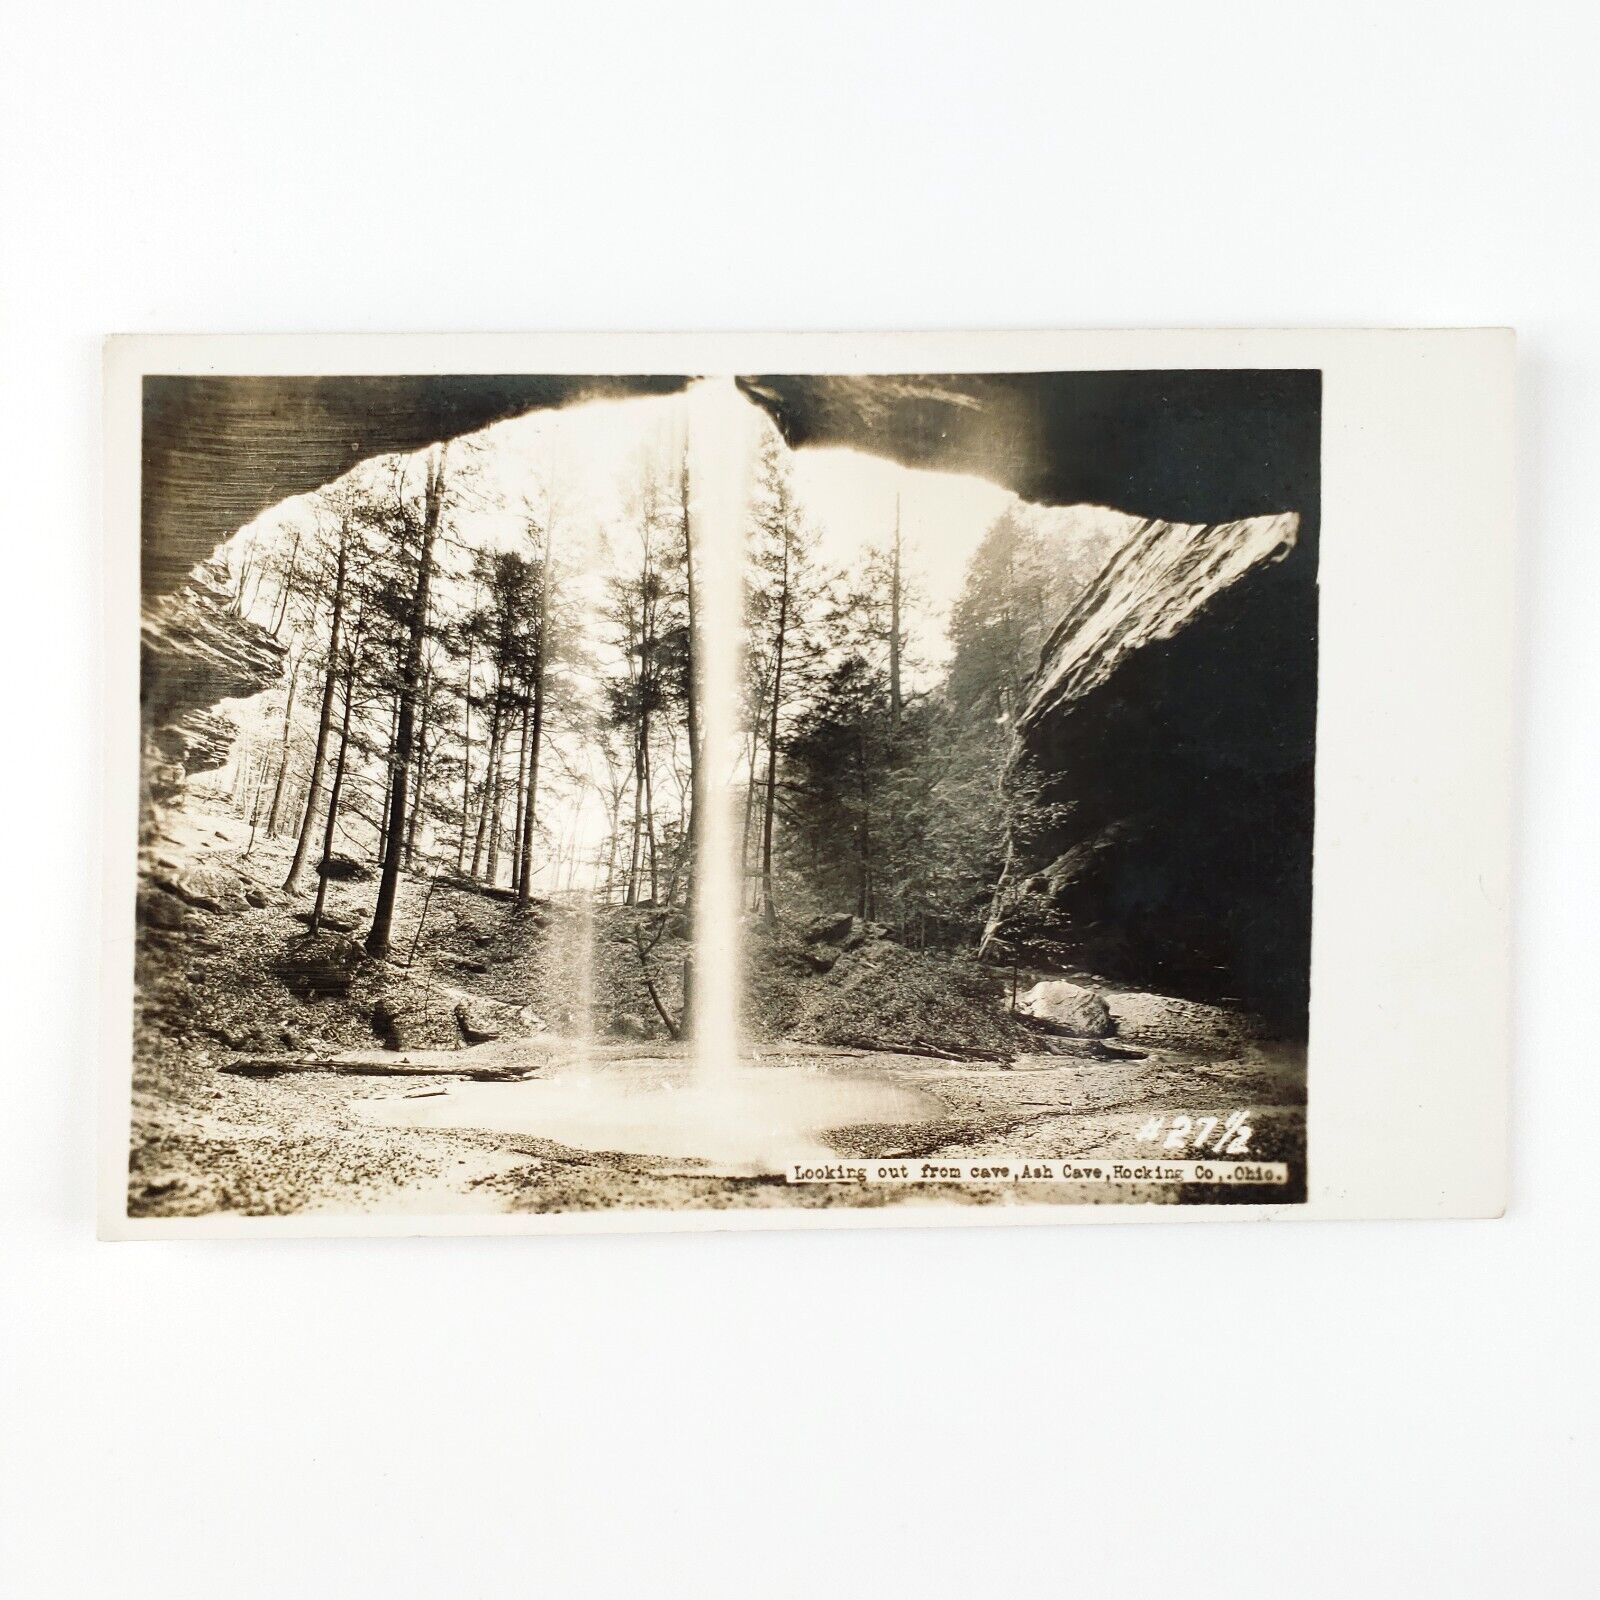 Ash Cave Hocky County RPPC Postcard 1940s Ohio Waterfall Real Photo Falls B2796